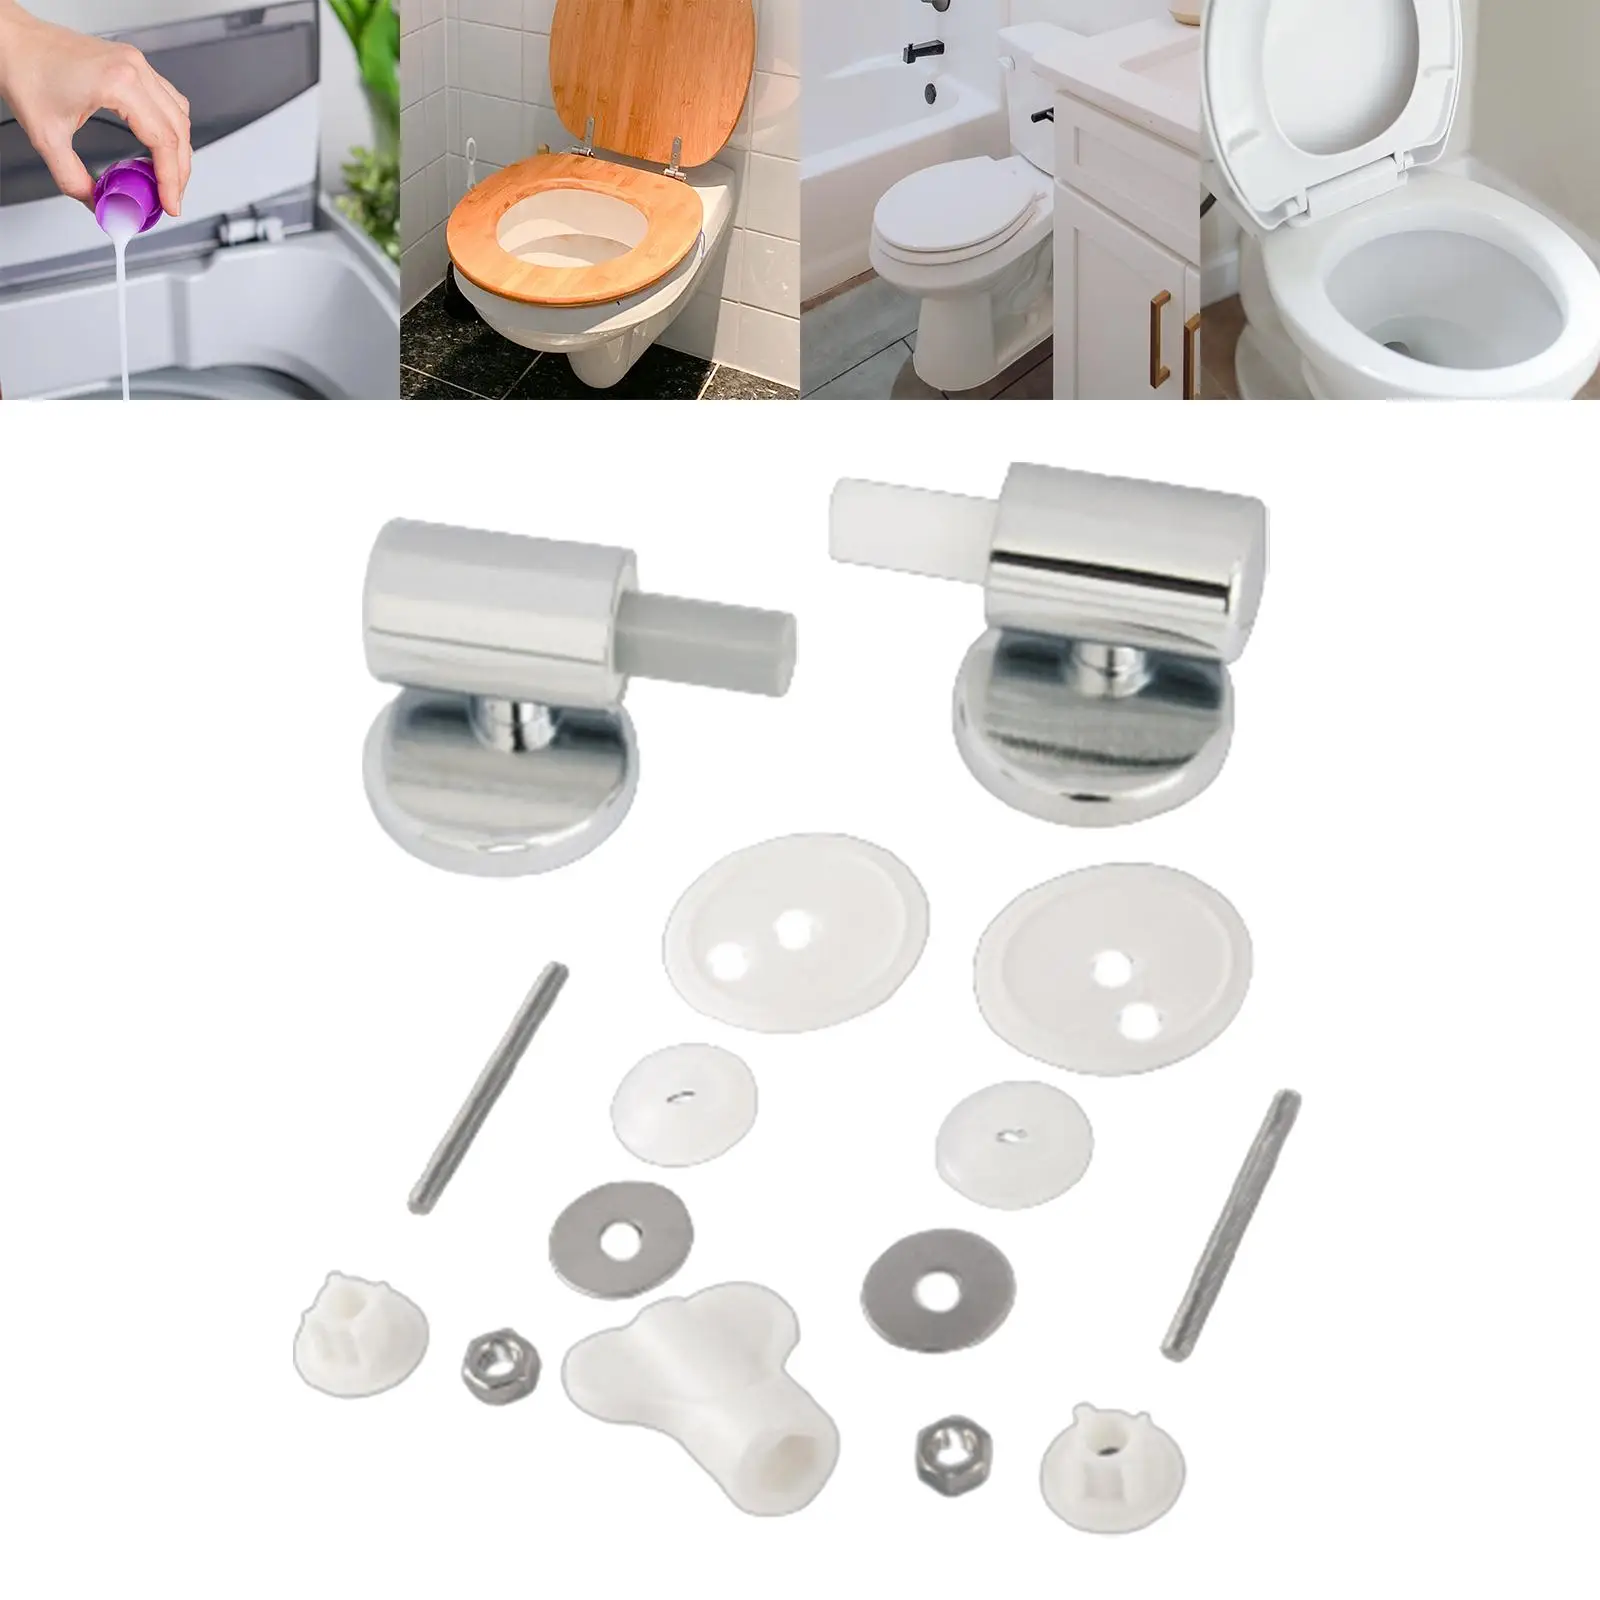 Toilet Seat Hinge Set Slow Drop Connector for Sliding Toilet